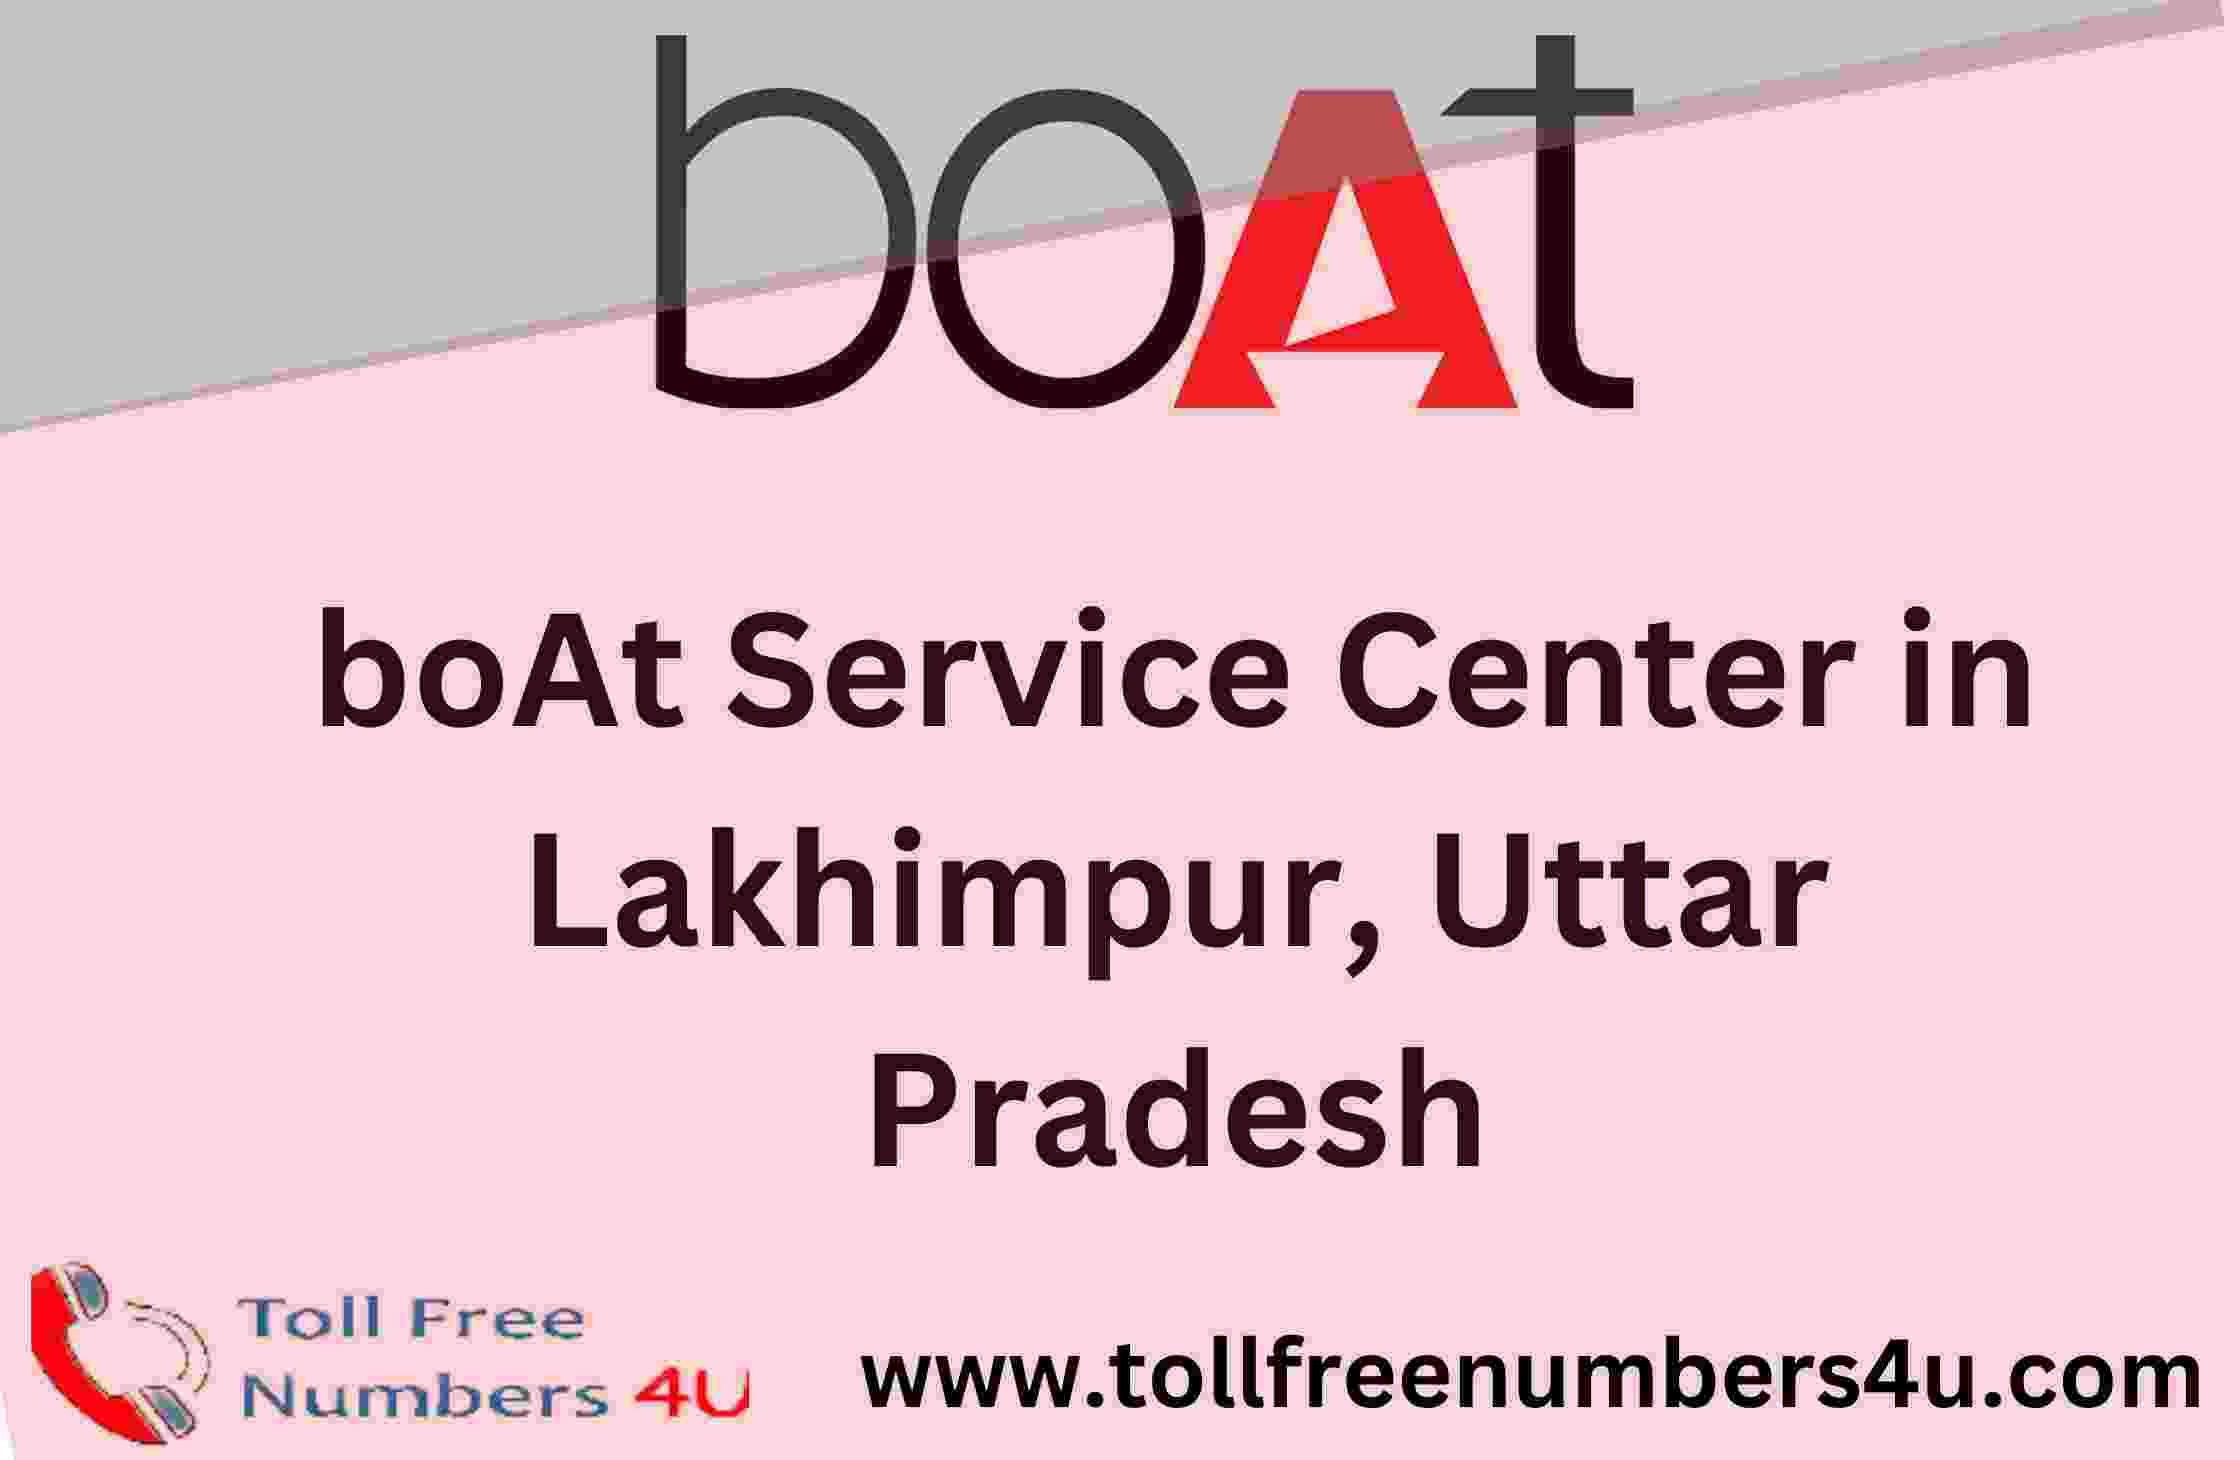 boAt Service Center in Lakhimpur - TollFreeNumbers4u